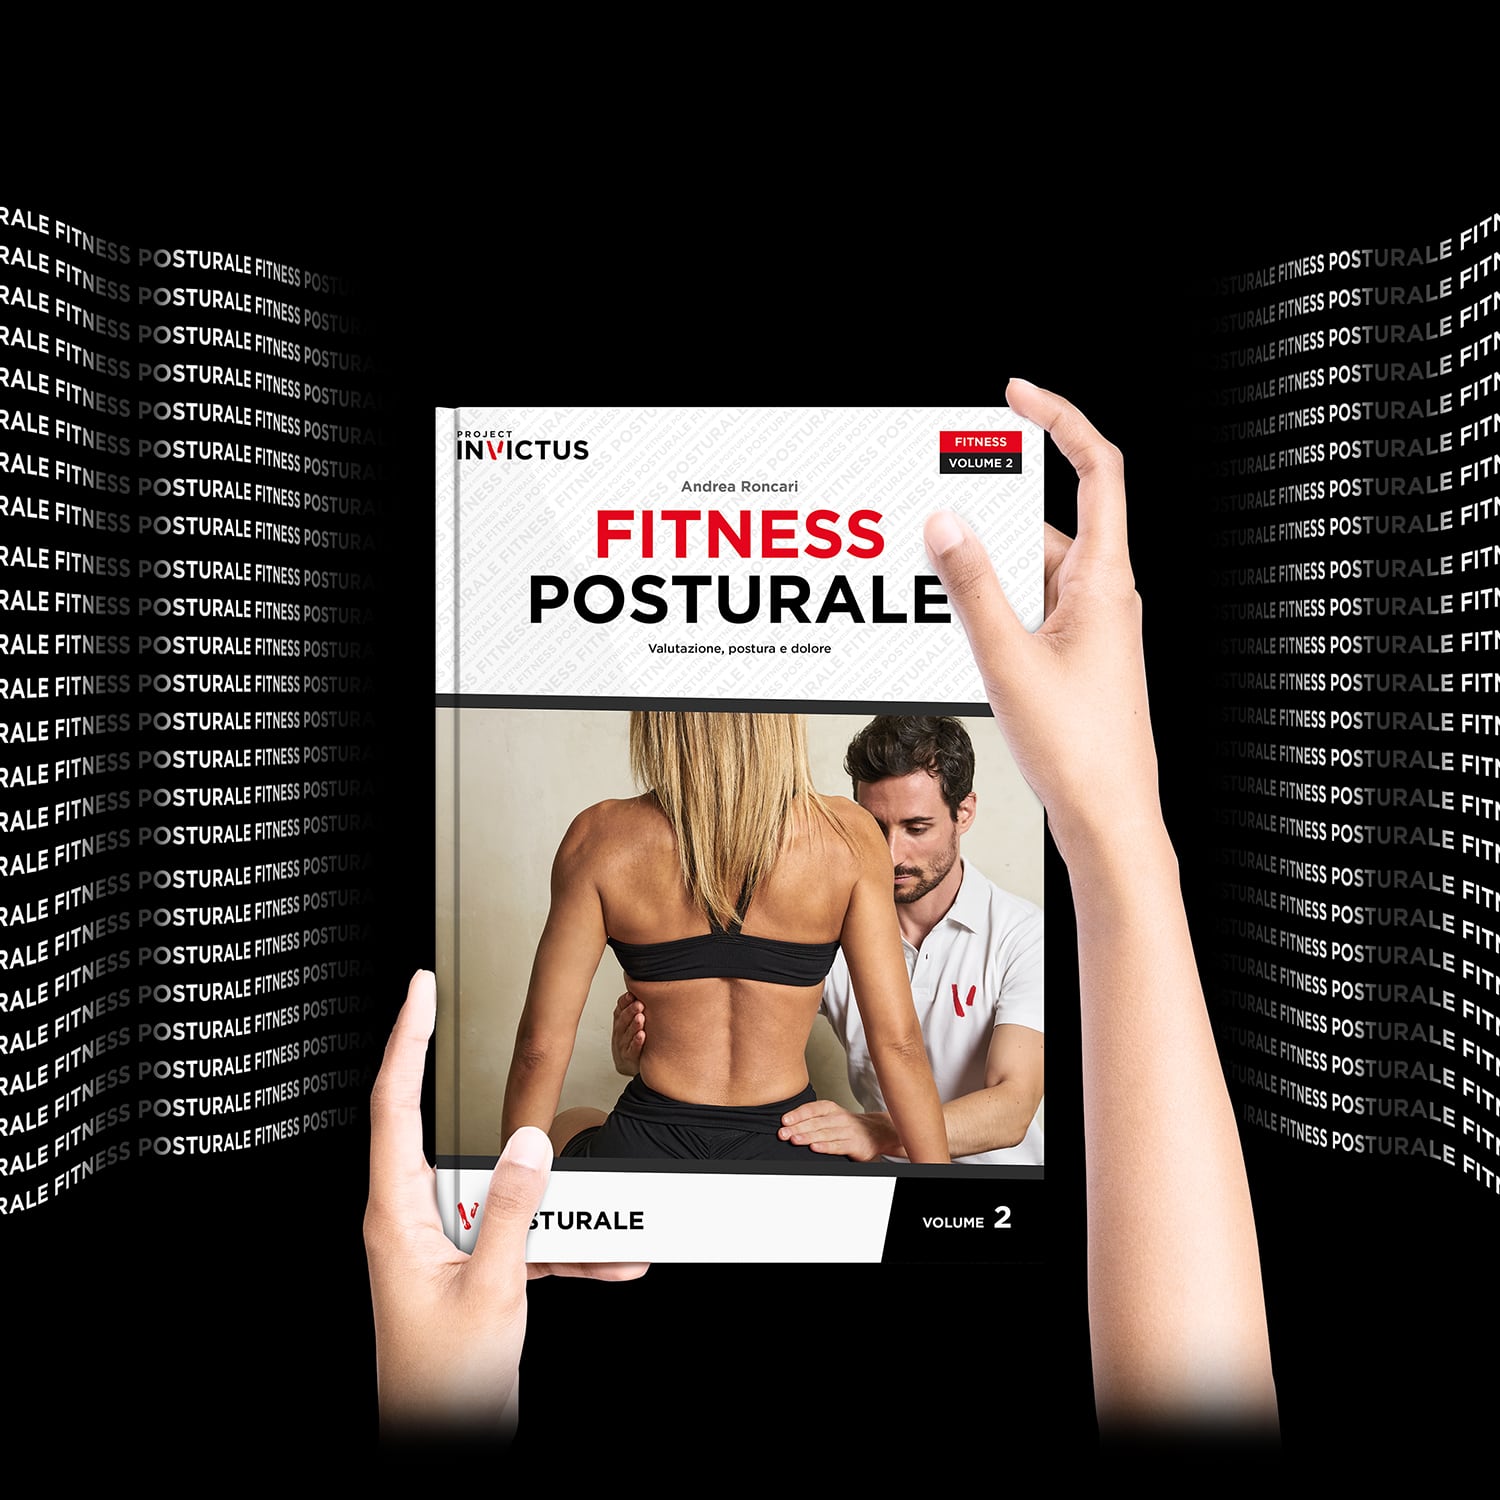 Fitness Posturale UX in Print